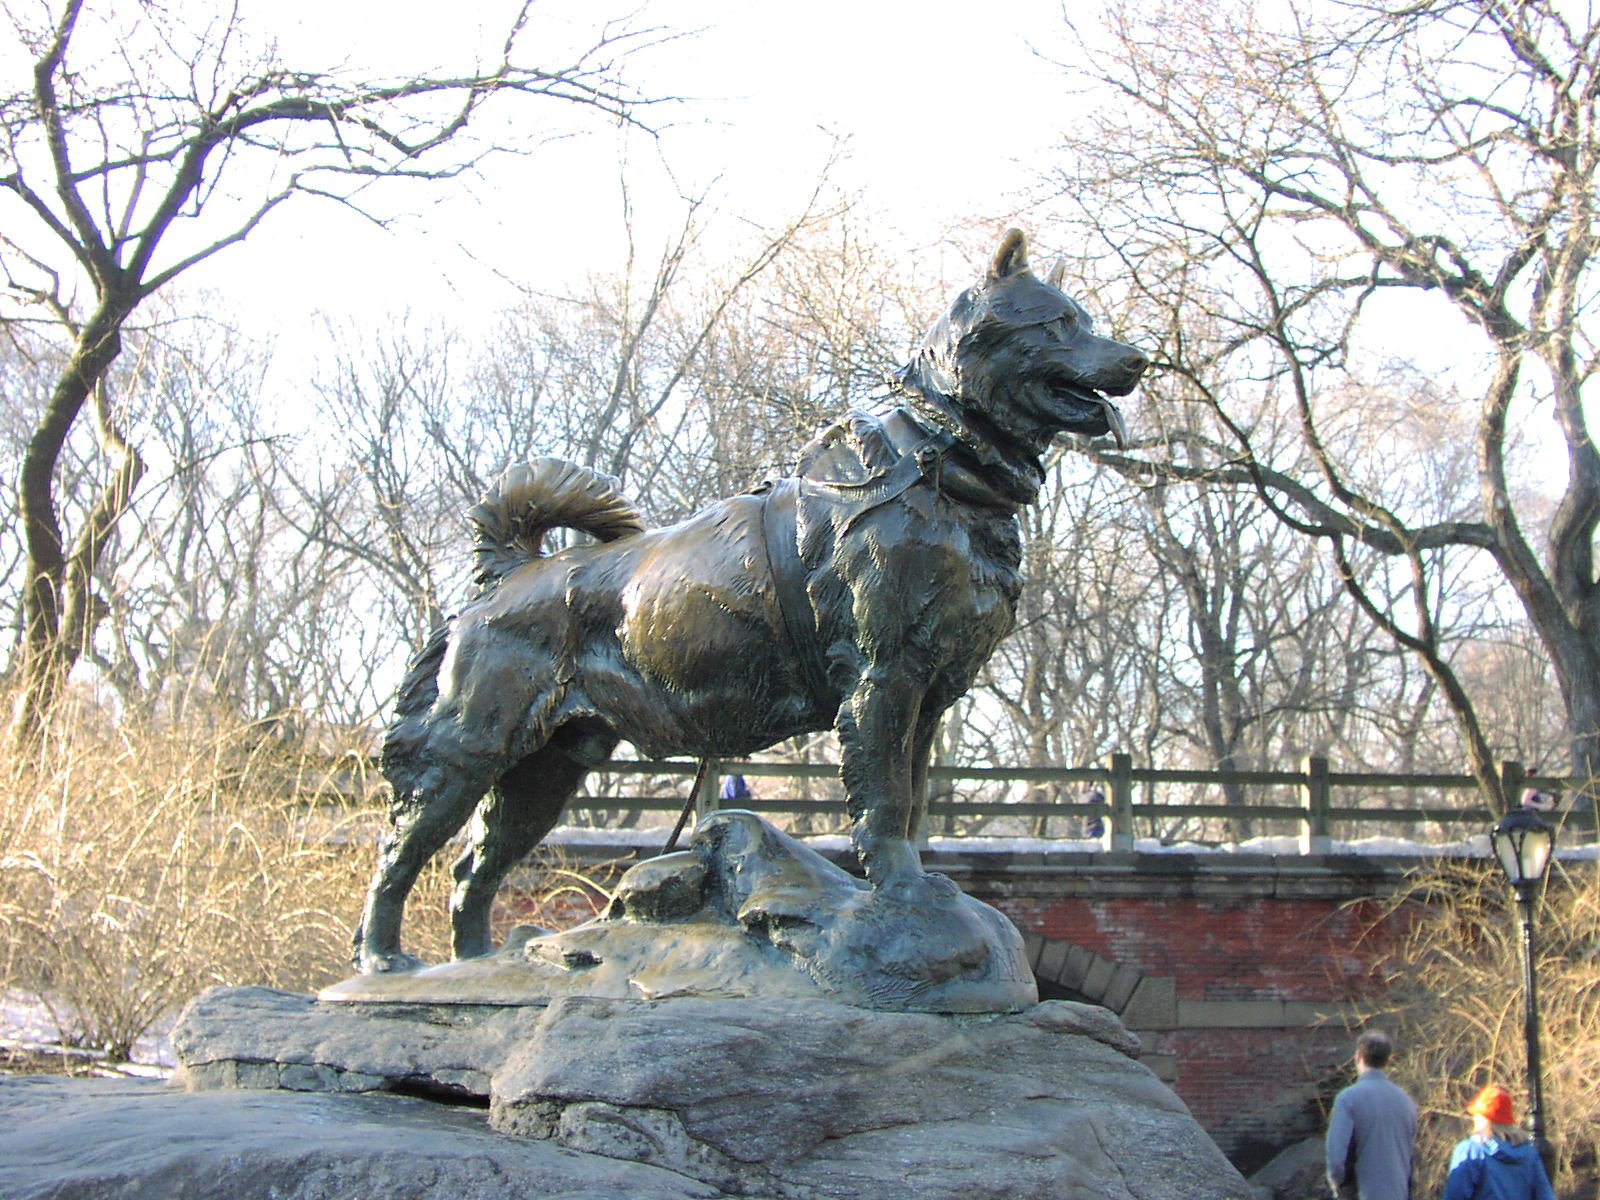 sled dog in central park